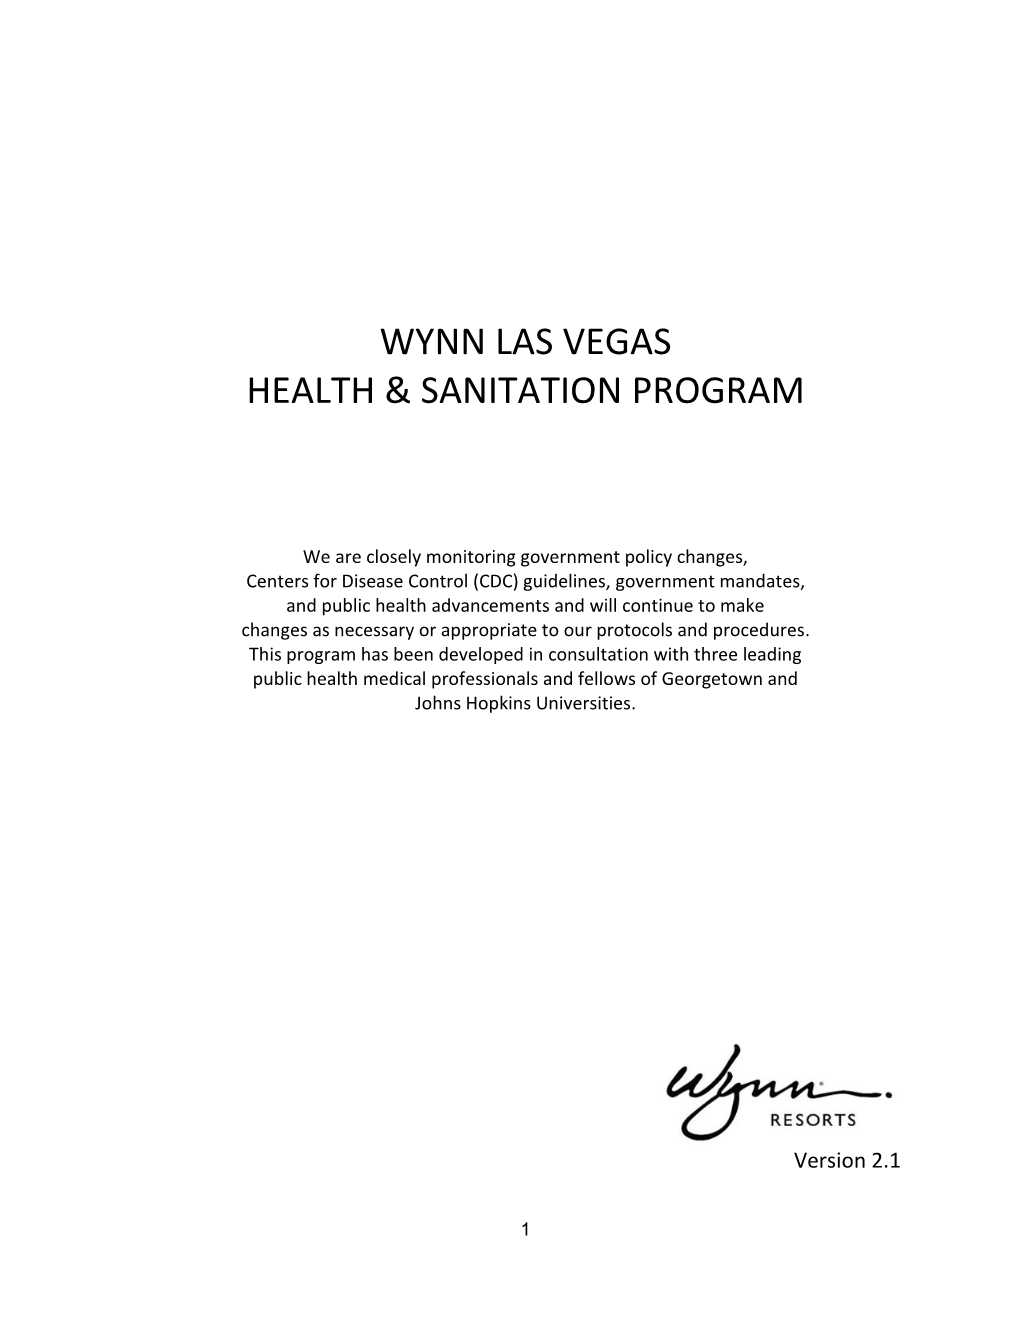 Wynn Las Vegas Health & Sanitation Program